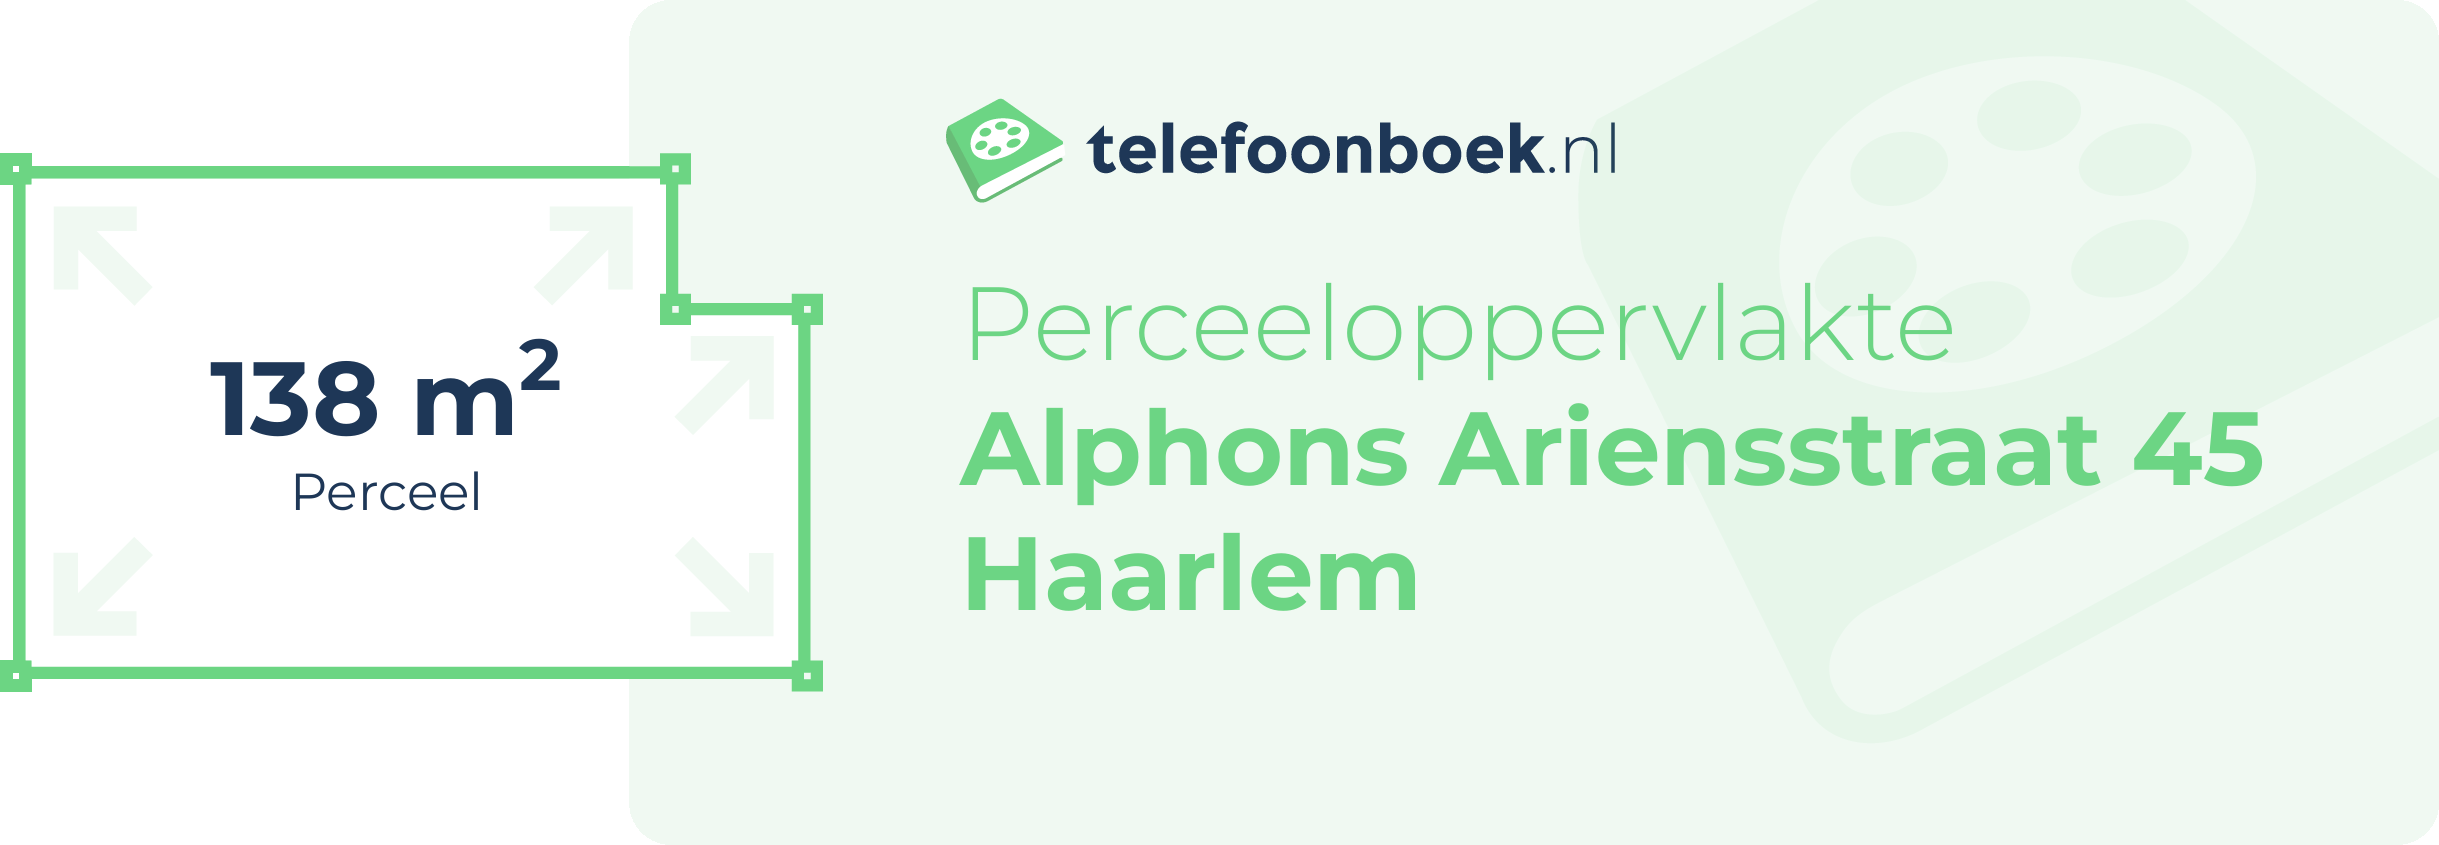 Perceeloppervlakte Alphons Ariensstraat 45 Haarlem